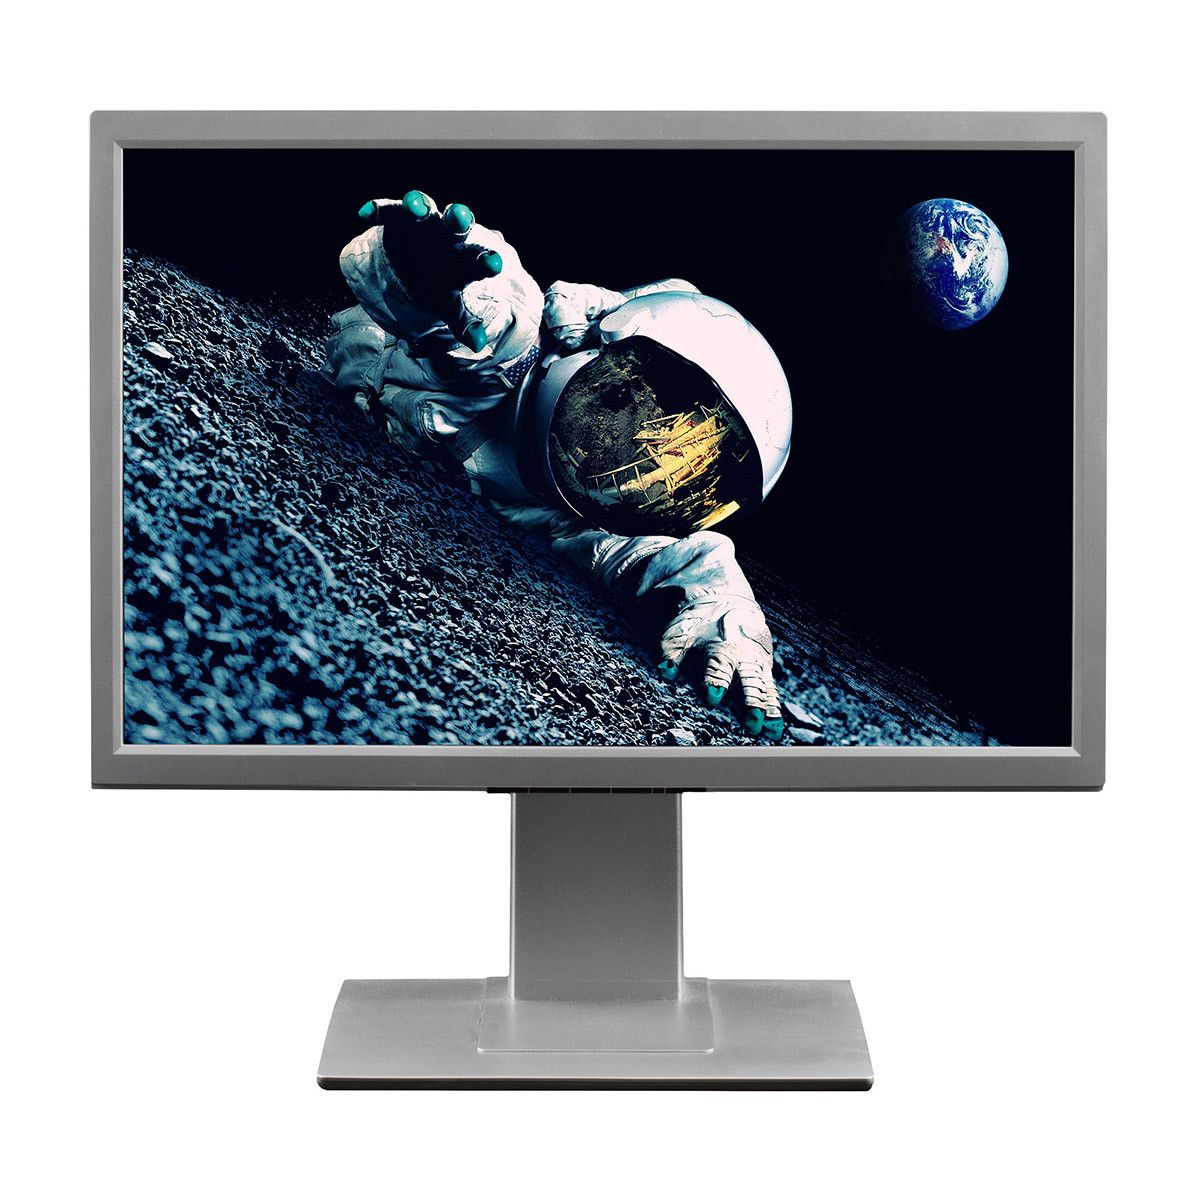 Fujitsu B22W-5, 22" LCD, 1680 x 1050, 16:10, negru - argintiu, monitor refurbished_1